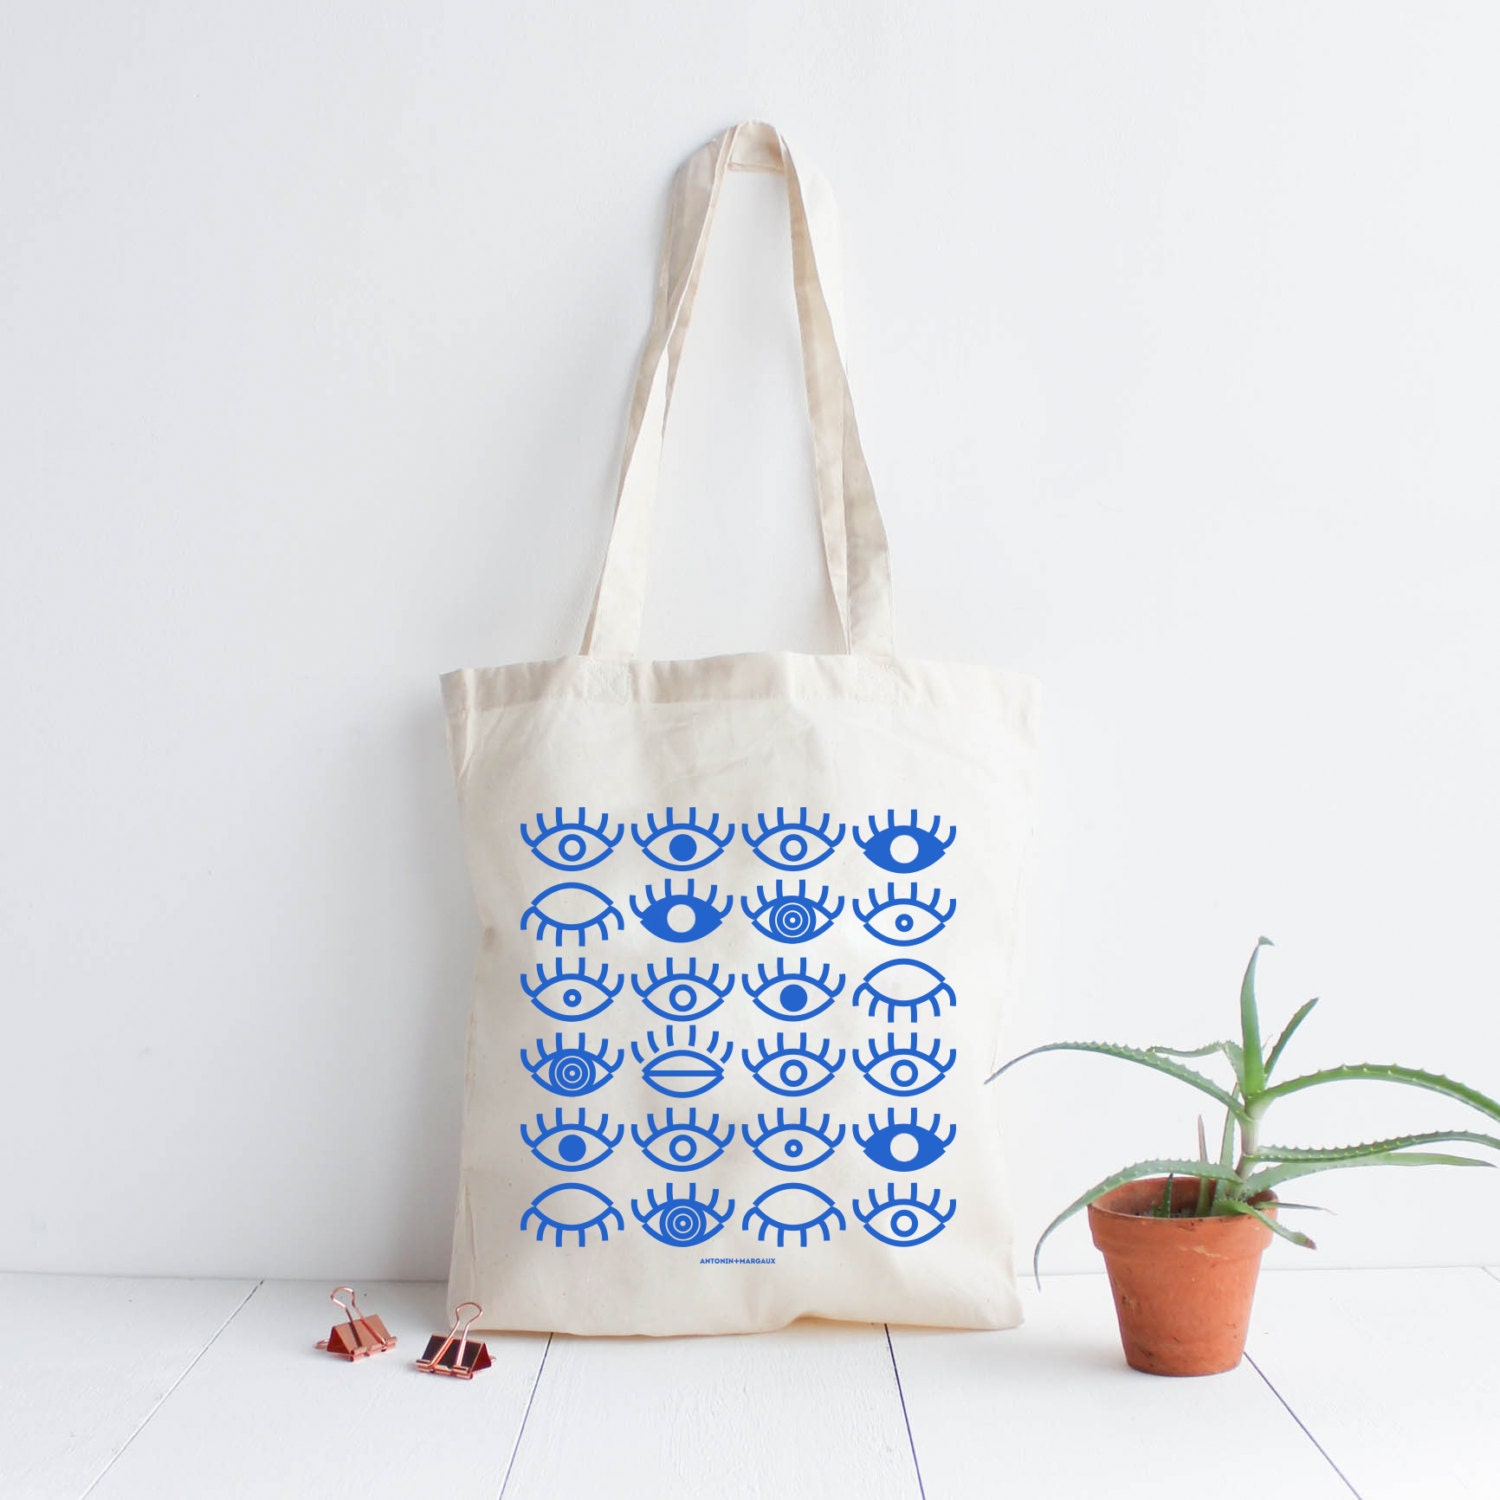 Sac tote bag coton naturel Oeil Yeux / sérigraphie bleue / sac